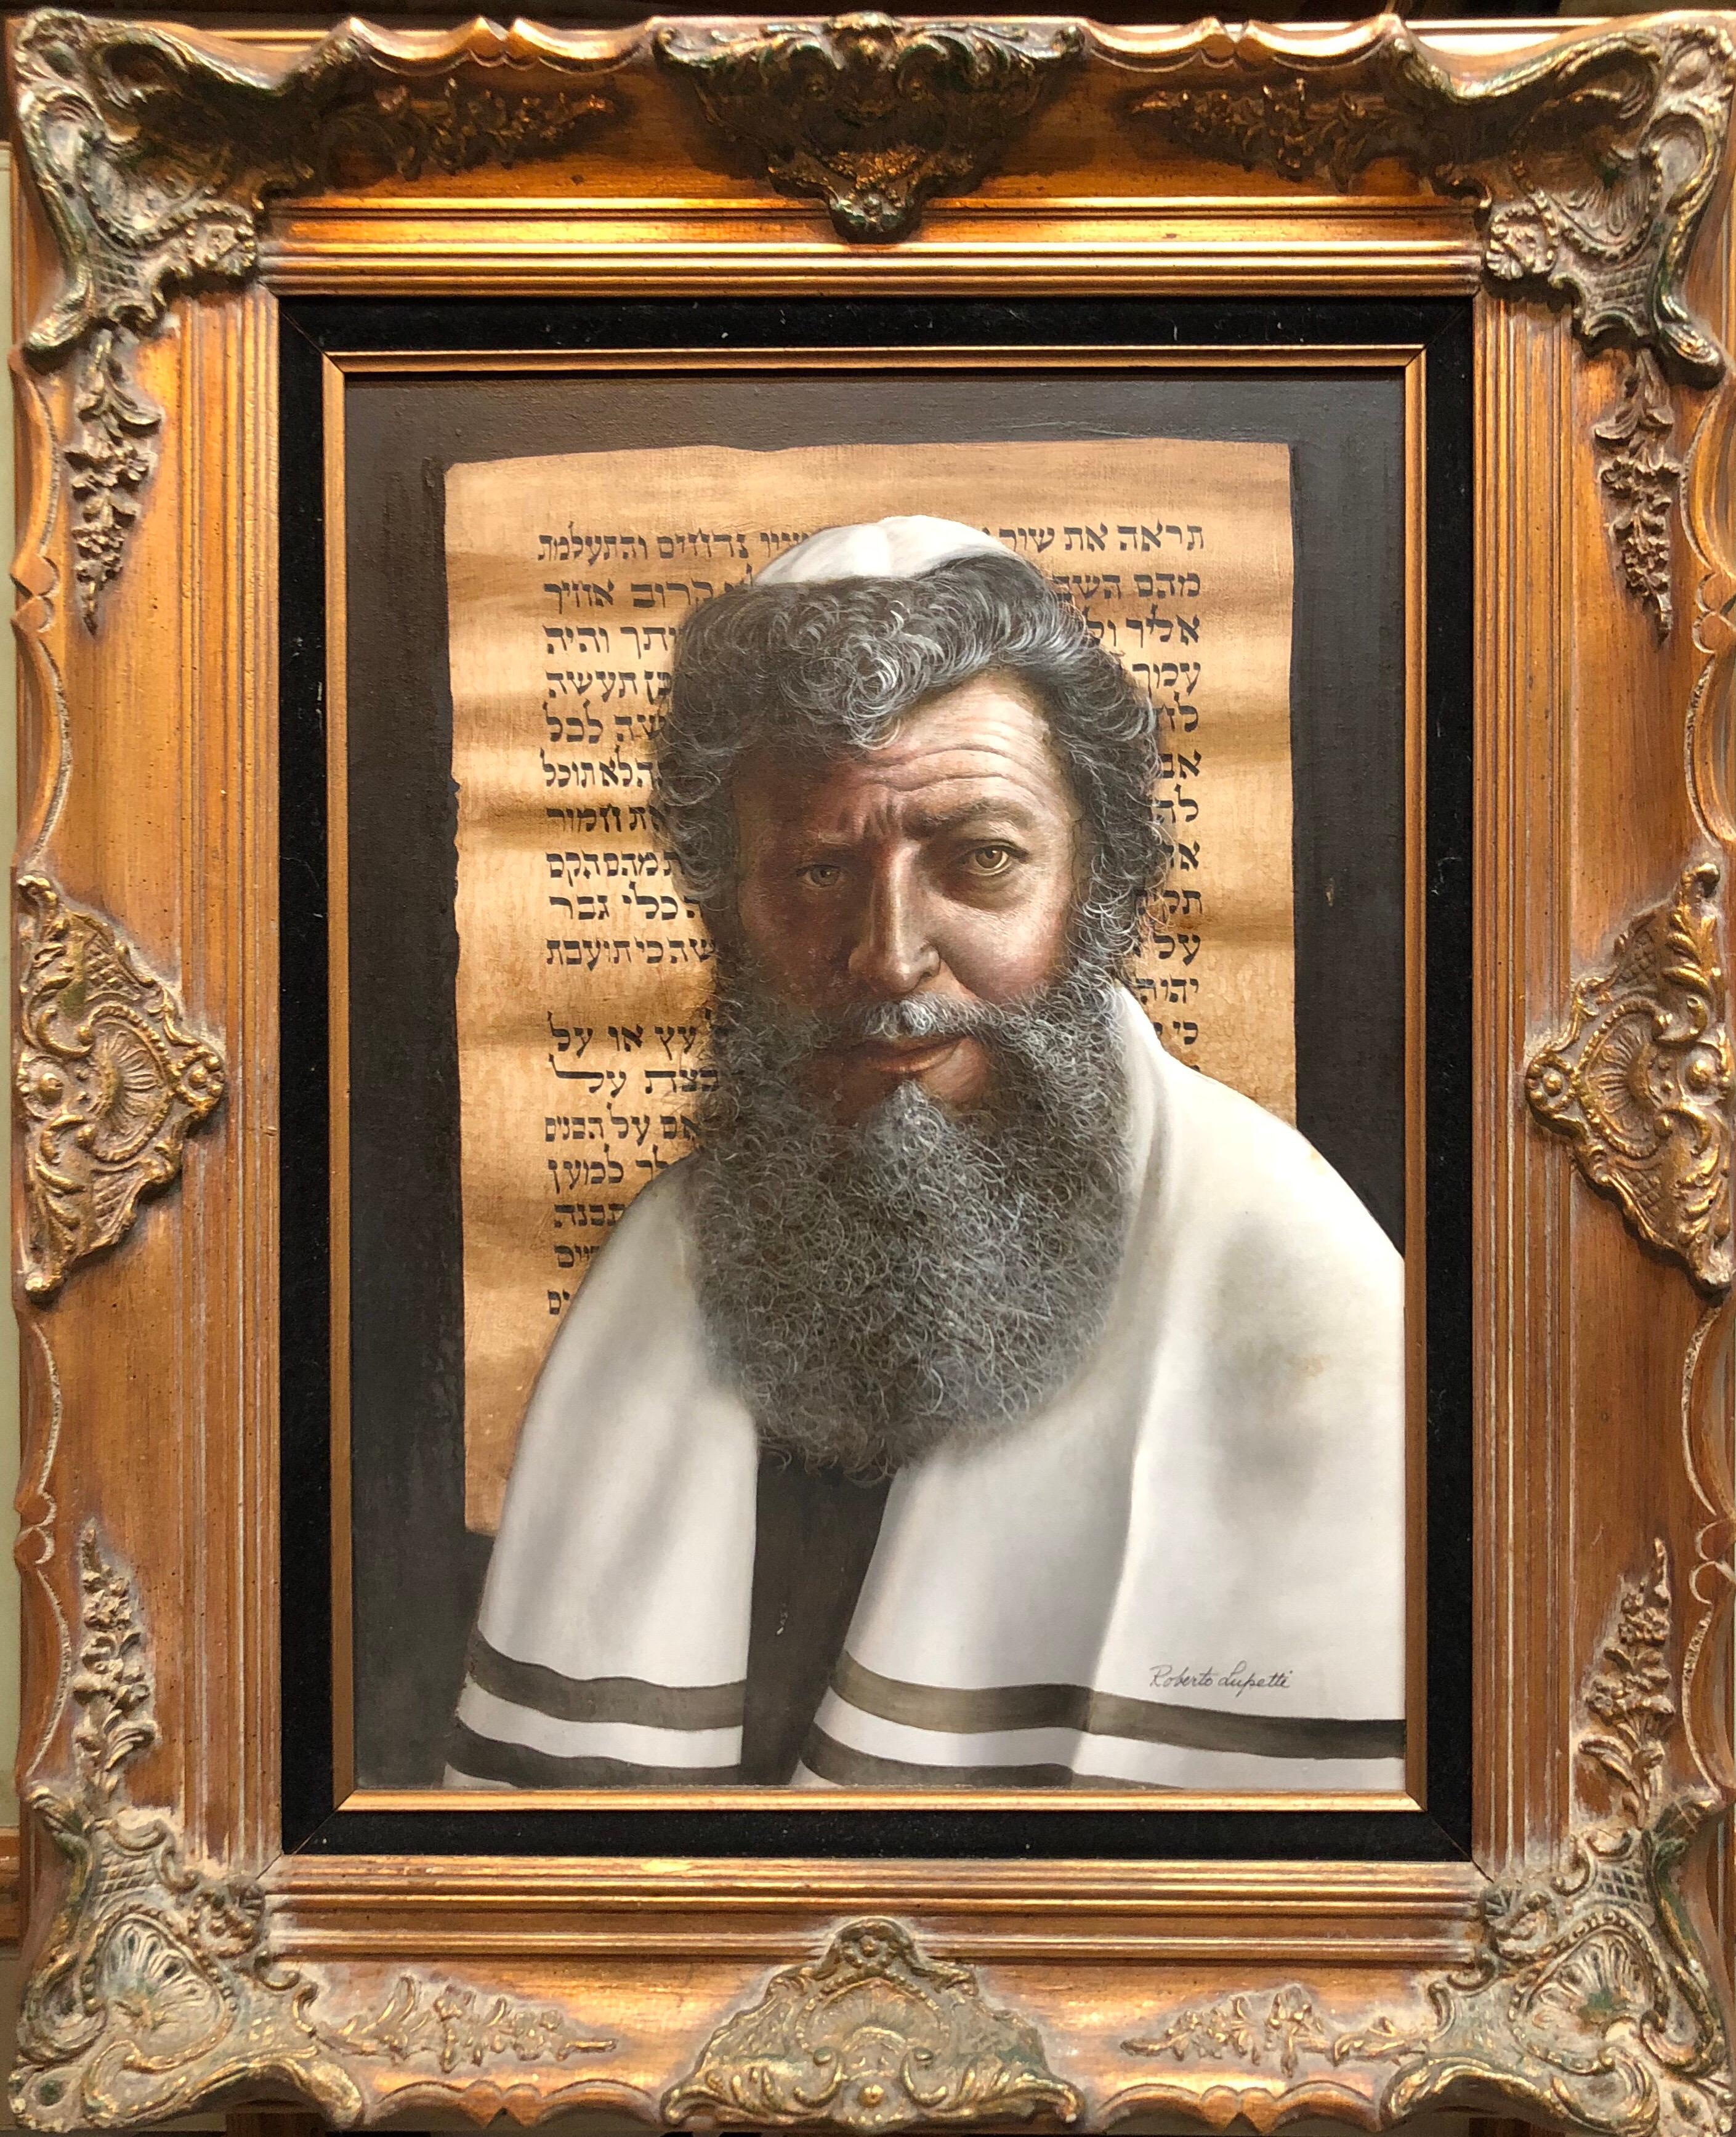 Roberto Lupetti Portrait Painting - Oil Painting "The Rabbi" Sensitive Judaica Portrait by Italian American master